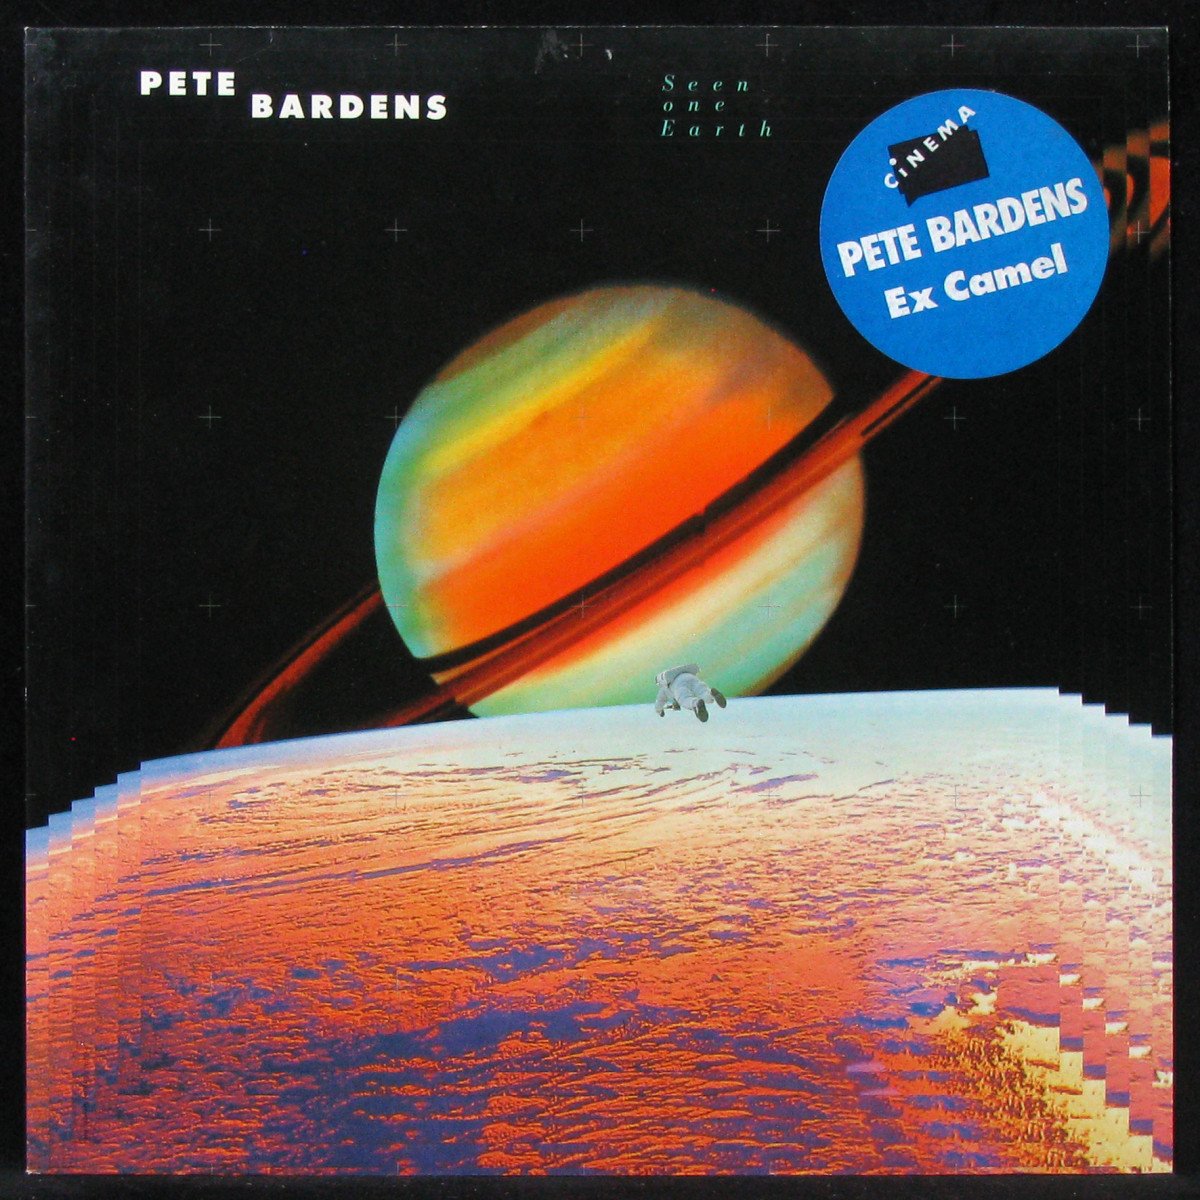 LP Pete Bardens — Seen One Earth фото